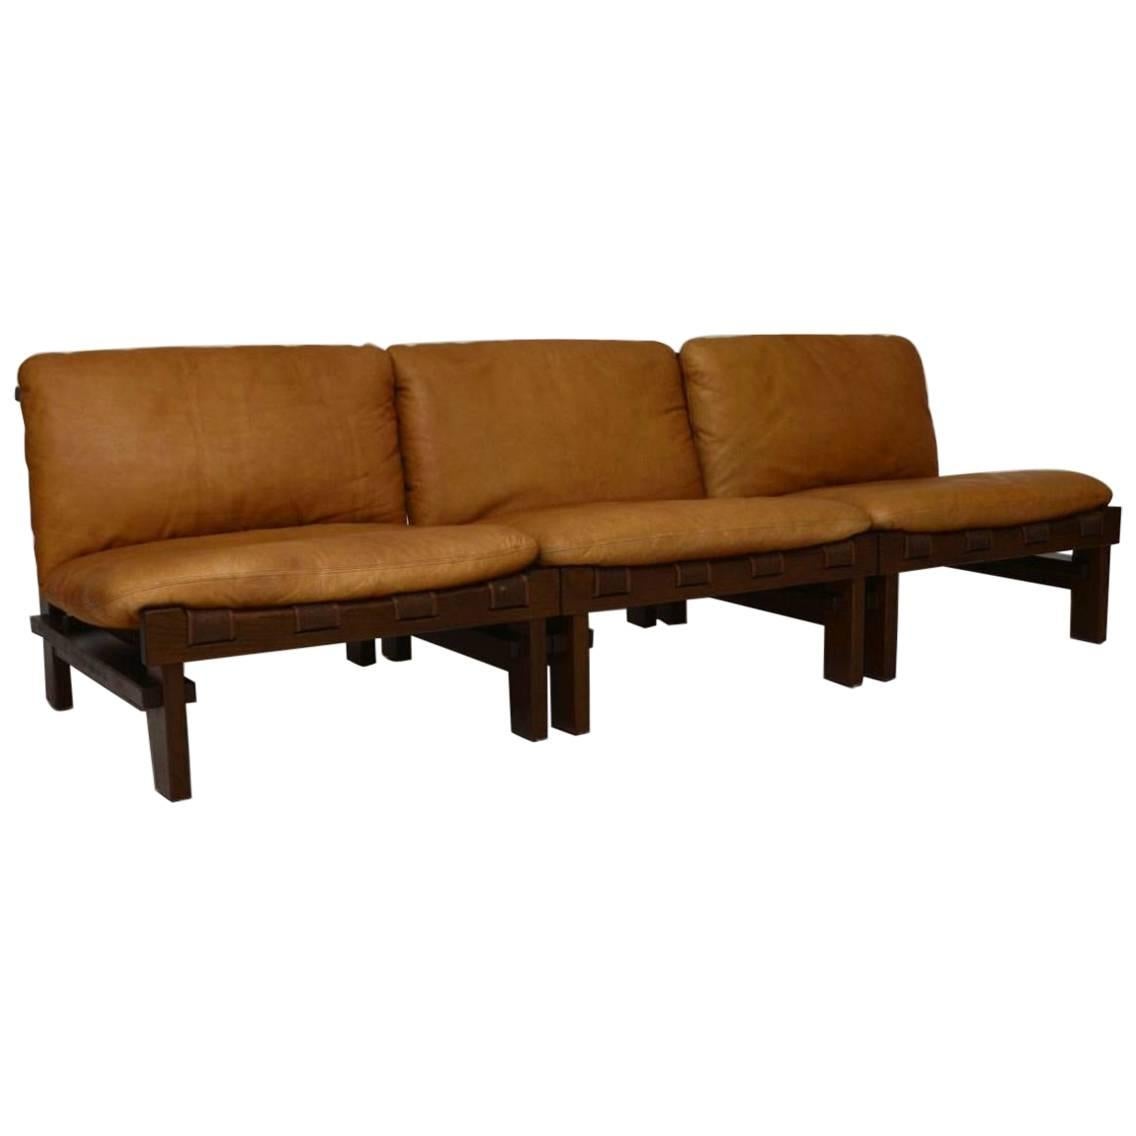 1960s Danish Leather Modular Sofa